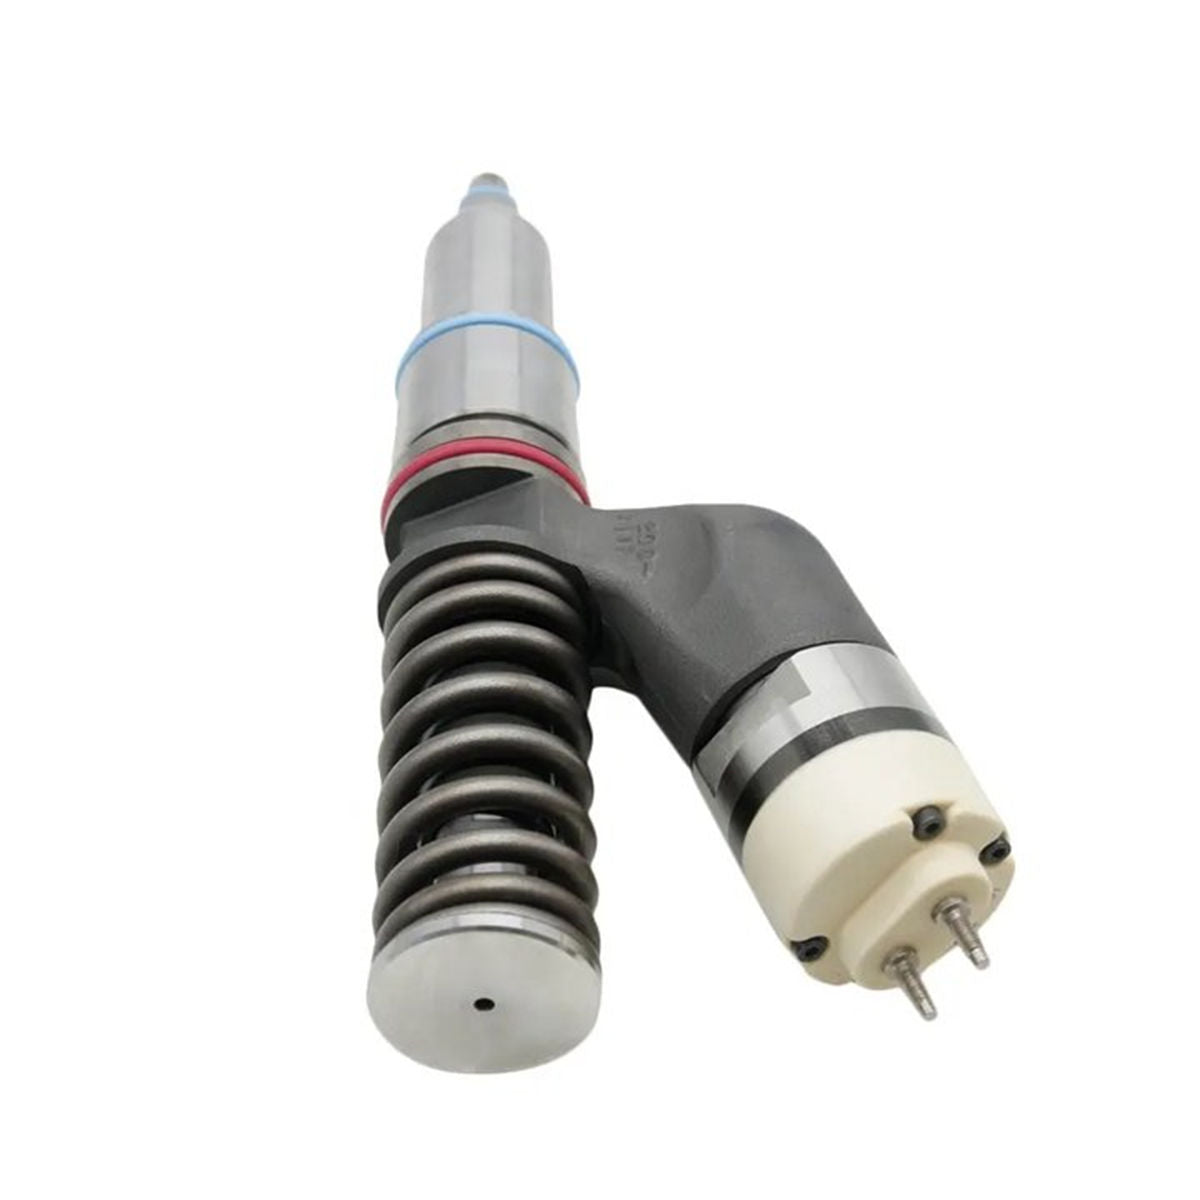 140-8951 1408951 Fuel Injector for Caterpillar 3406E Diesel Engine - Sinocmp